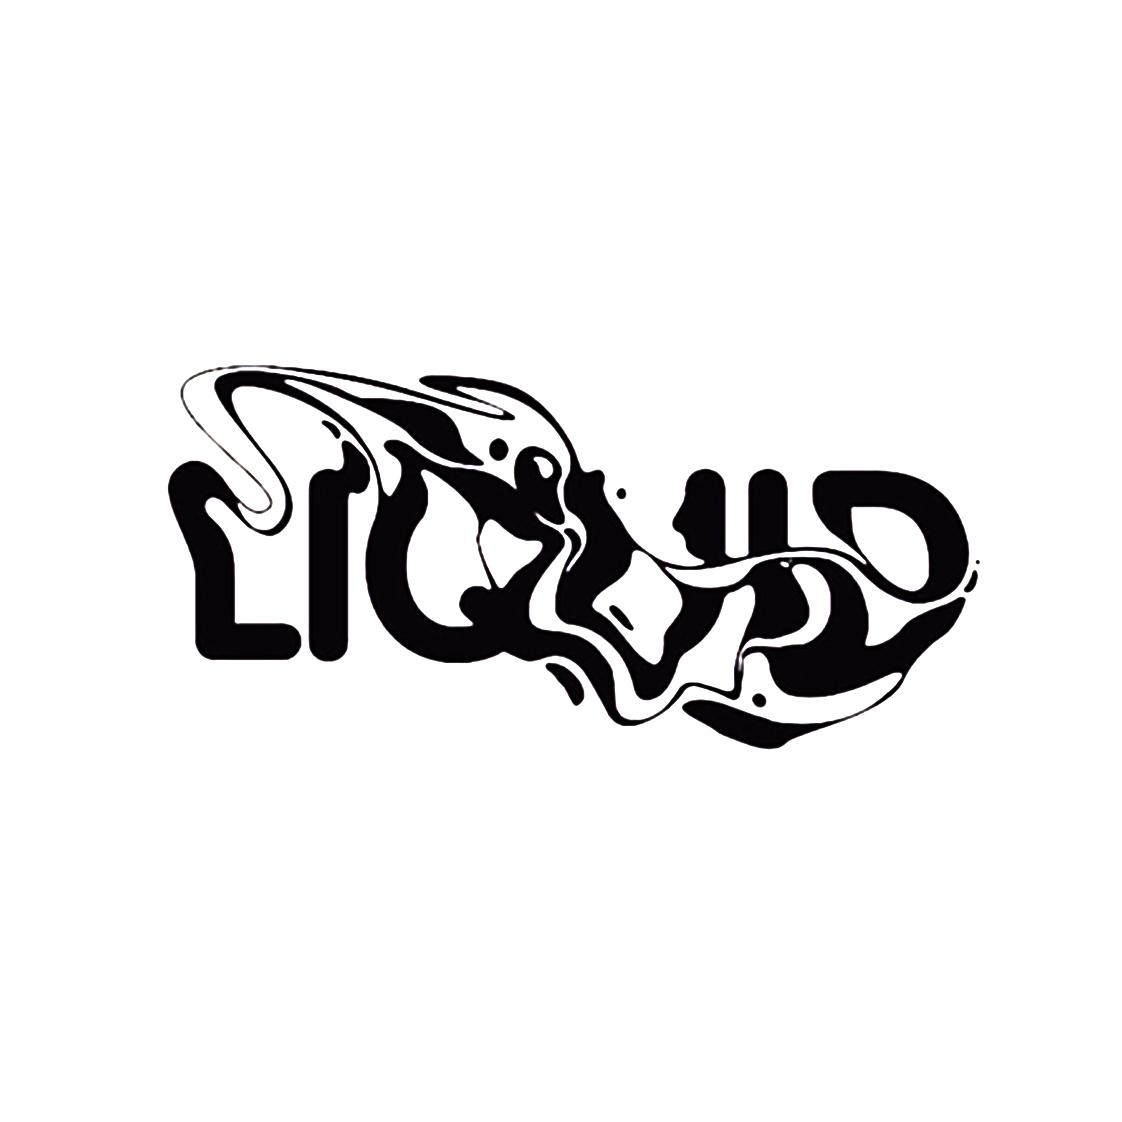 LIQUID背包商标转让费用买卖交易流程